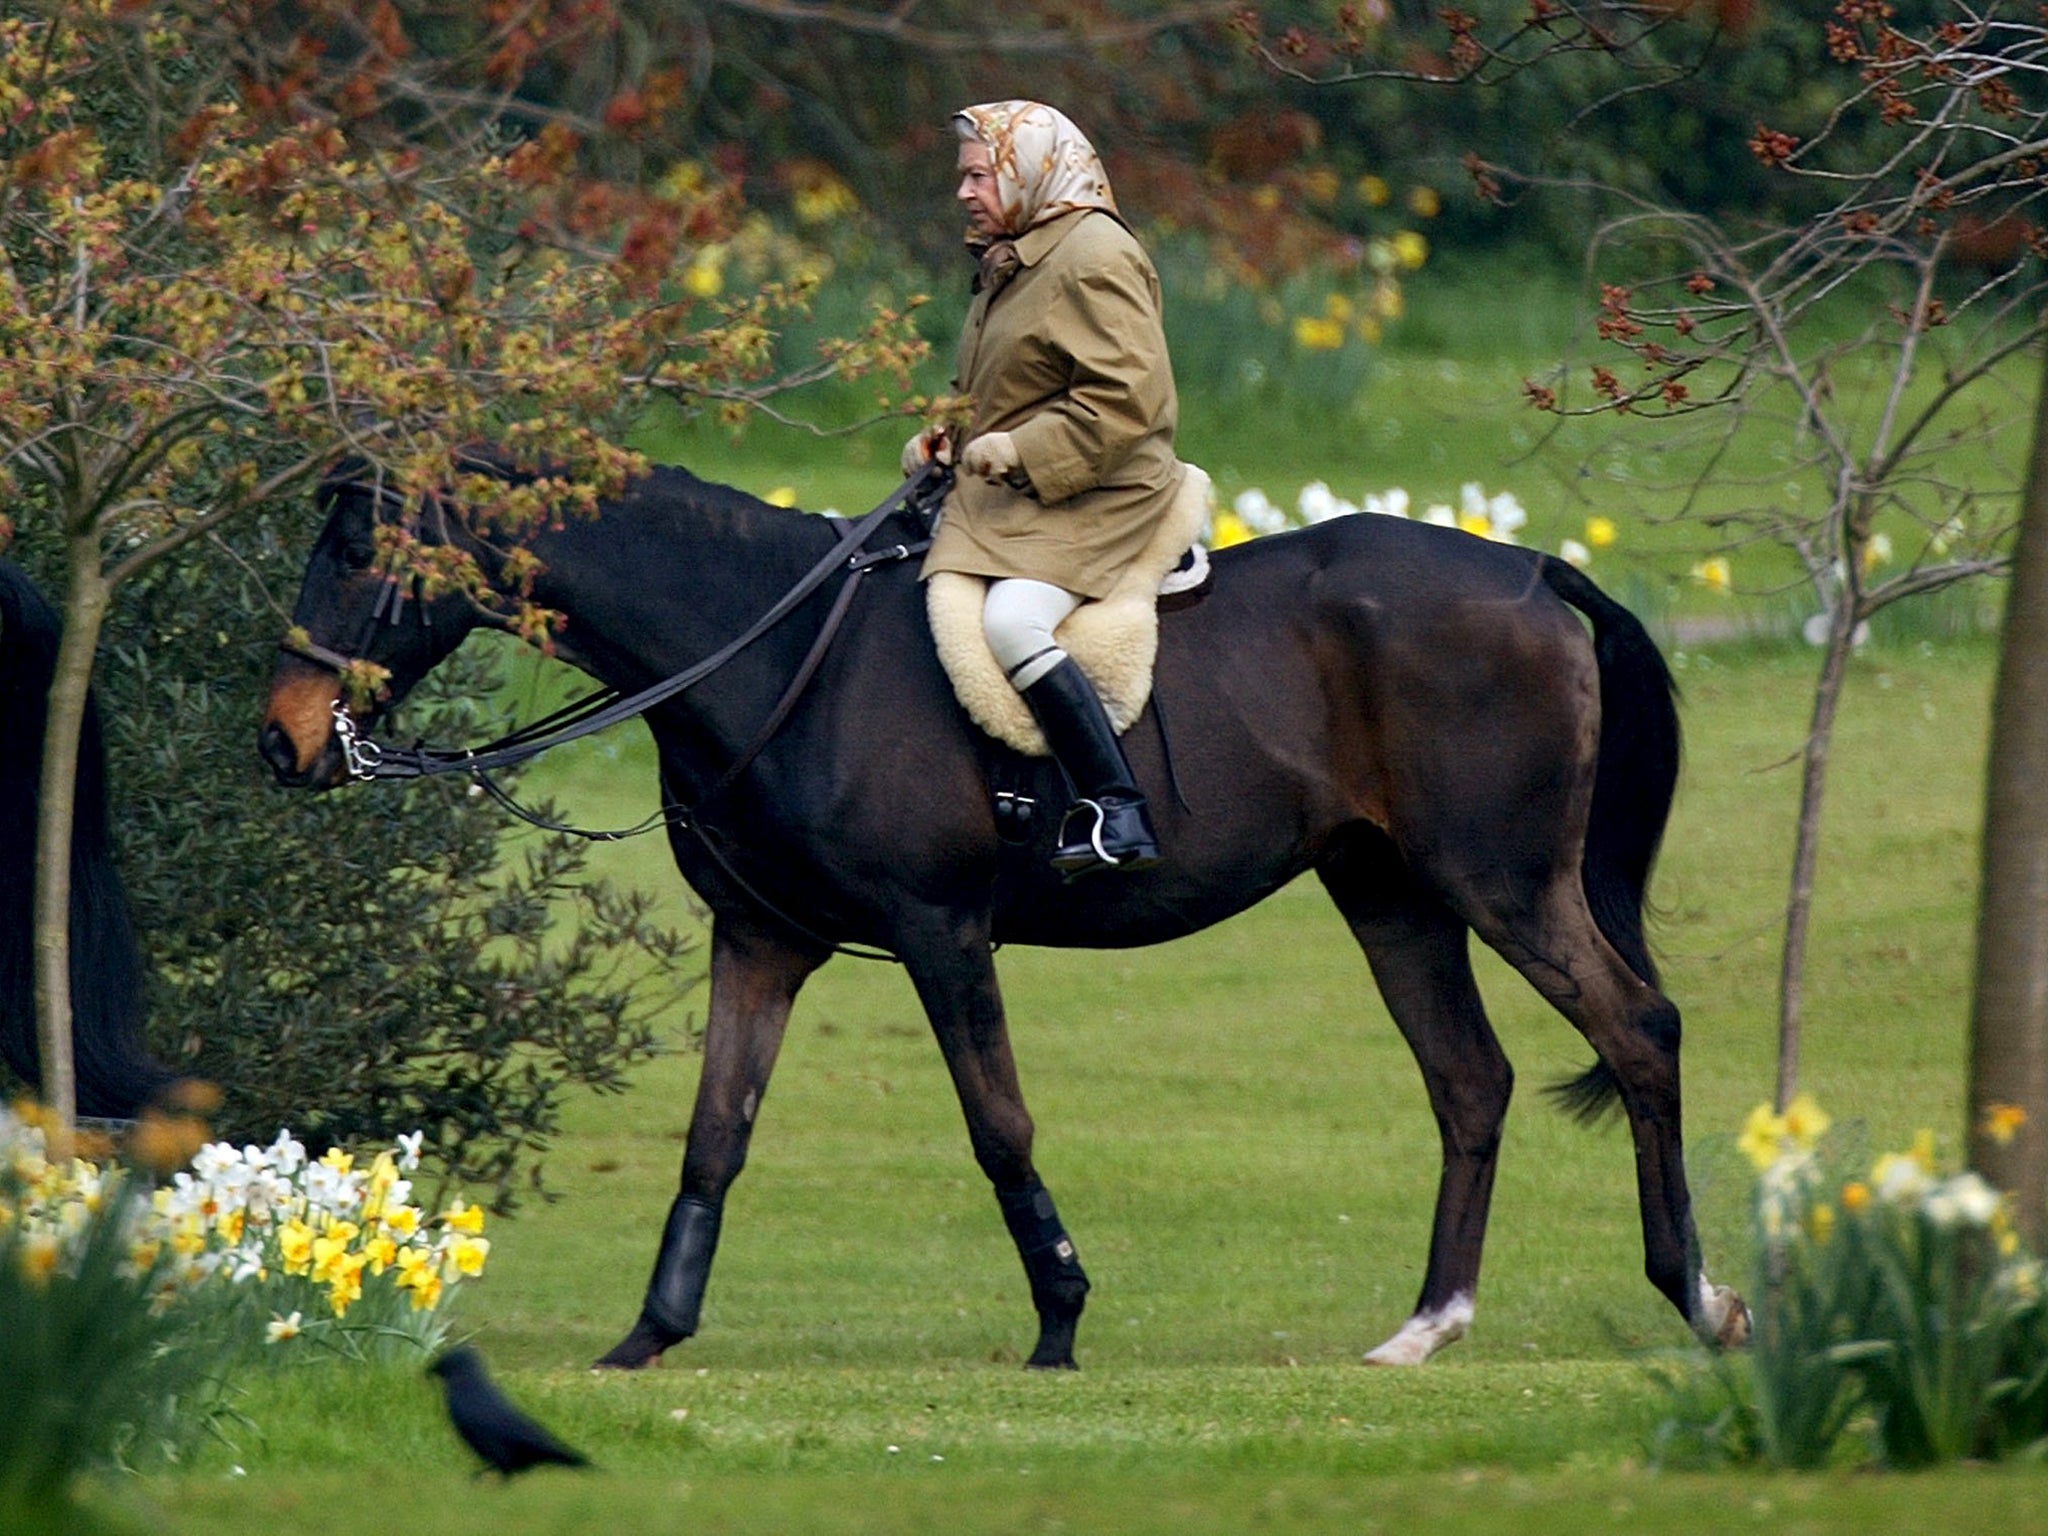 Queen Elizabeth rides her horse in the grounds of Windsor Castle, 2002